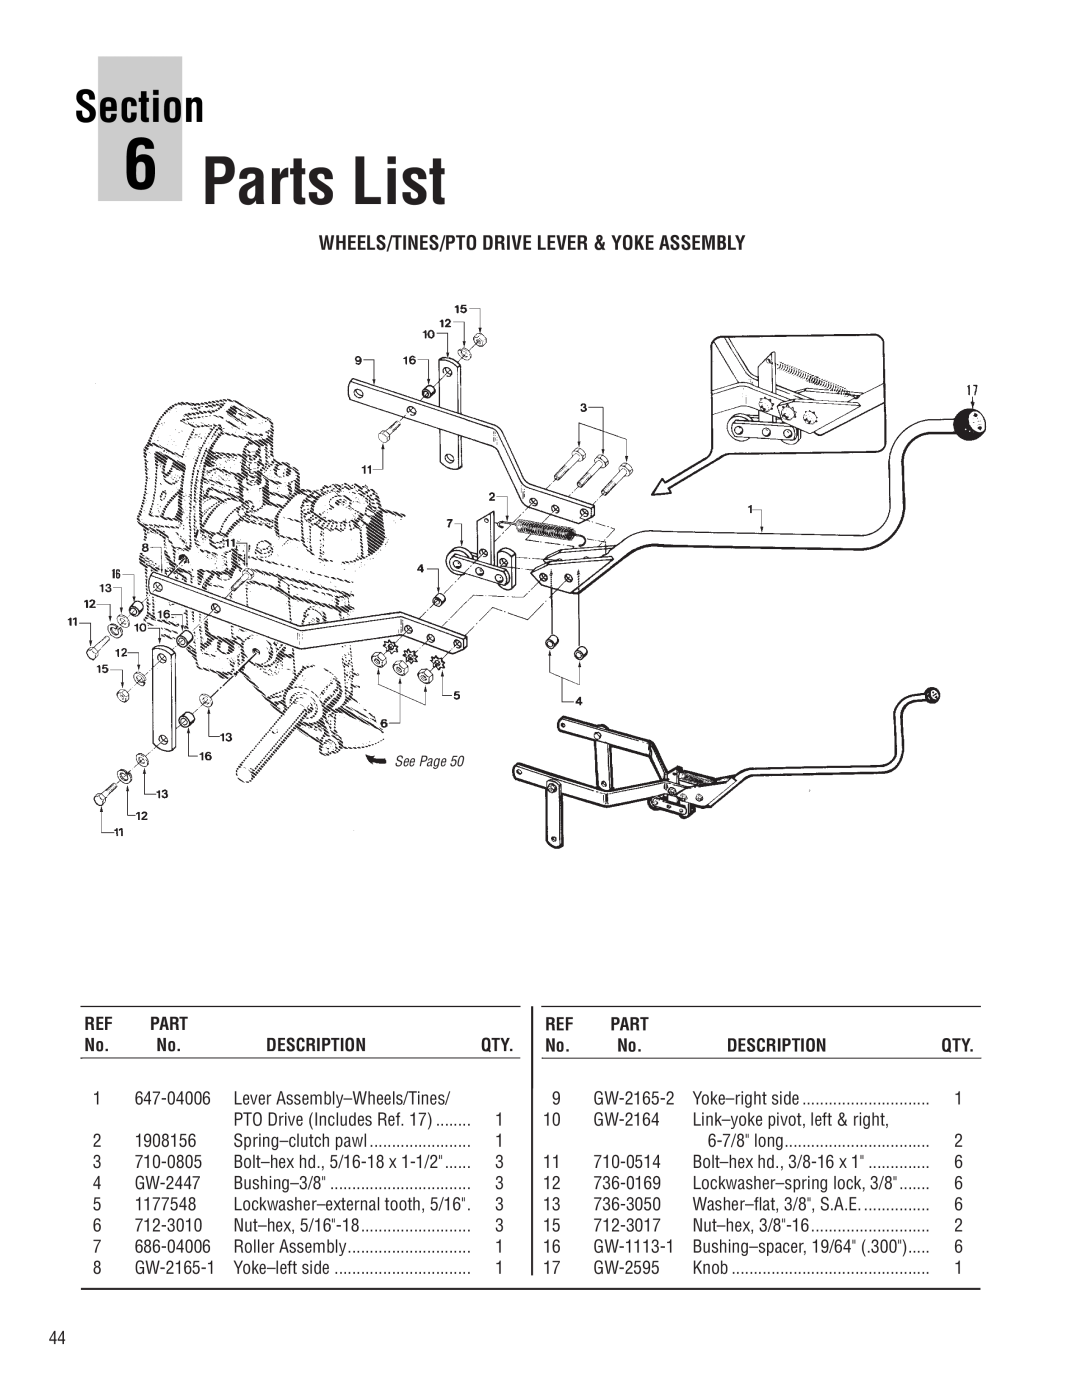 Troy-Bilt E683G, E683F manual Parts List, Wheels/Tines/Pto Drive Lever & Yoke Assembly, Description, Section 